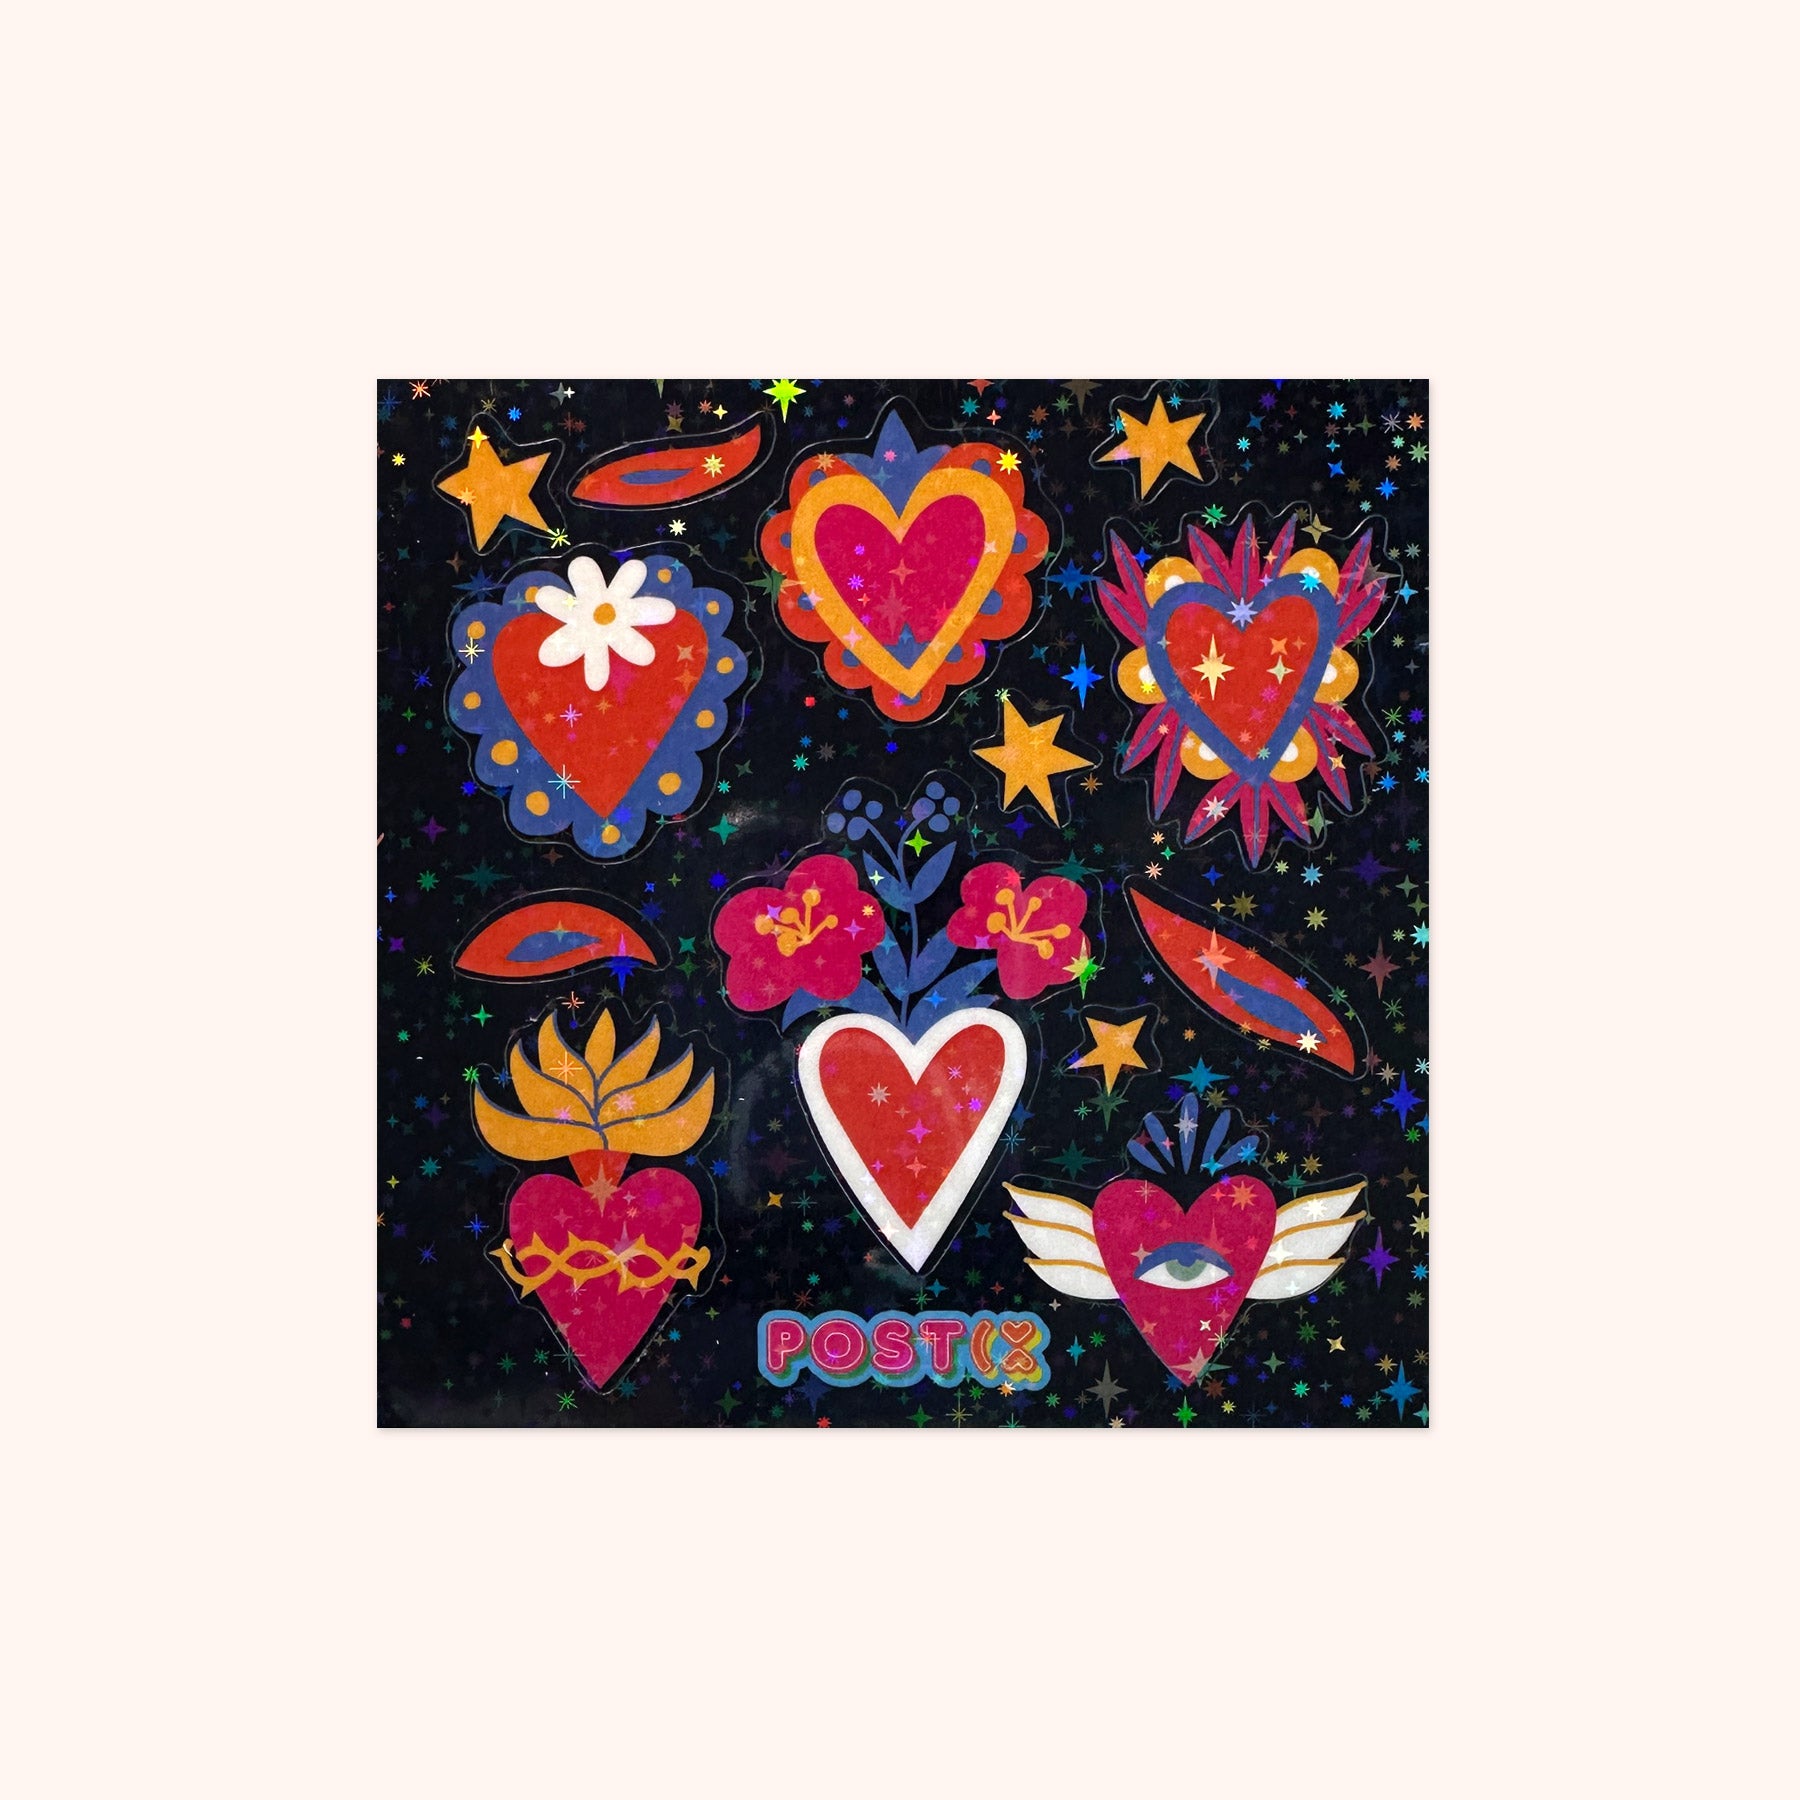 Kitschy Love Hearts Hologram Square Sticker Sheet